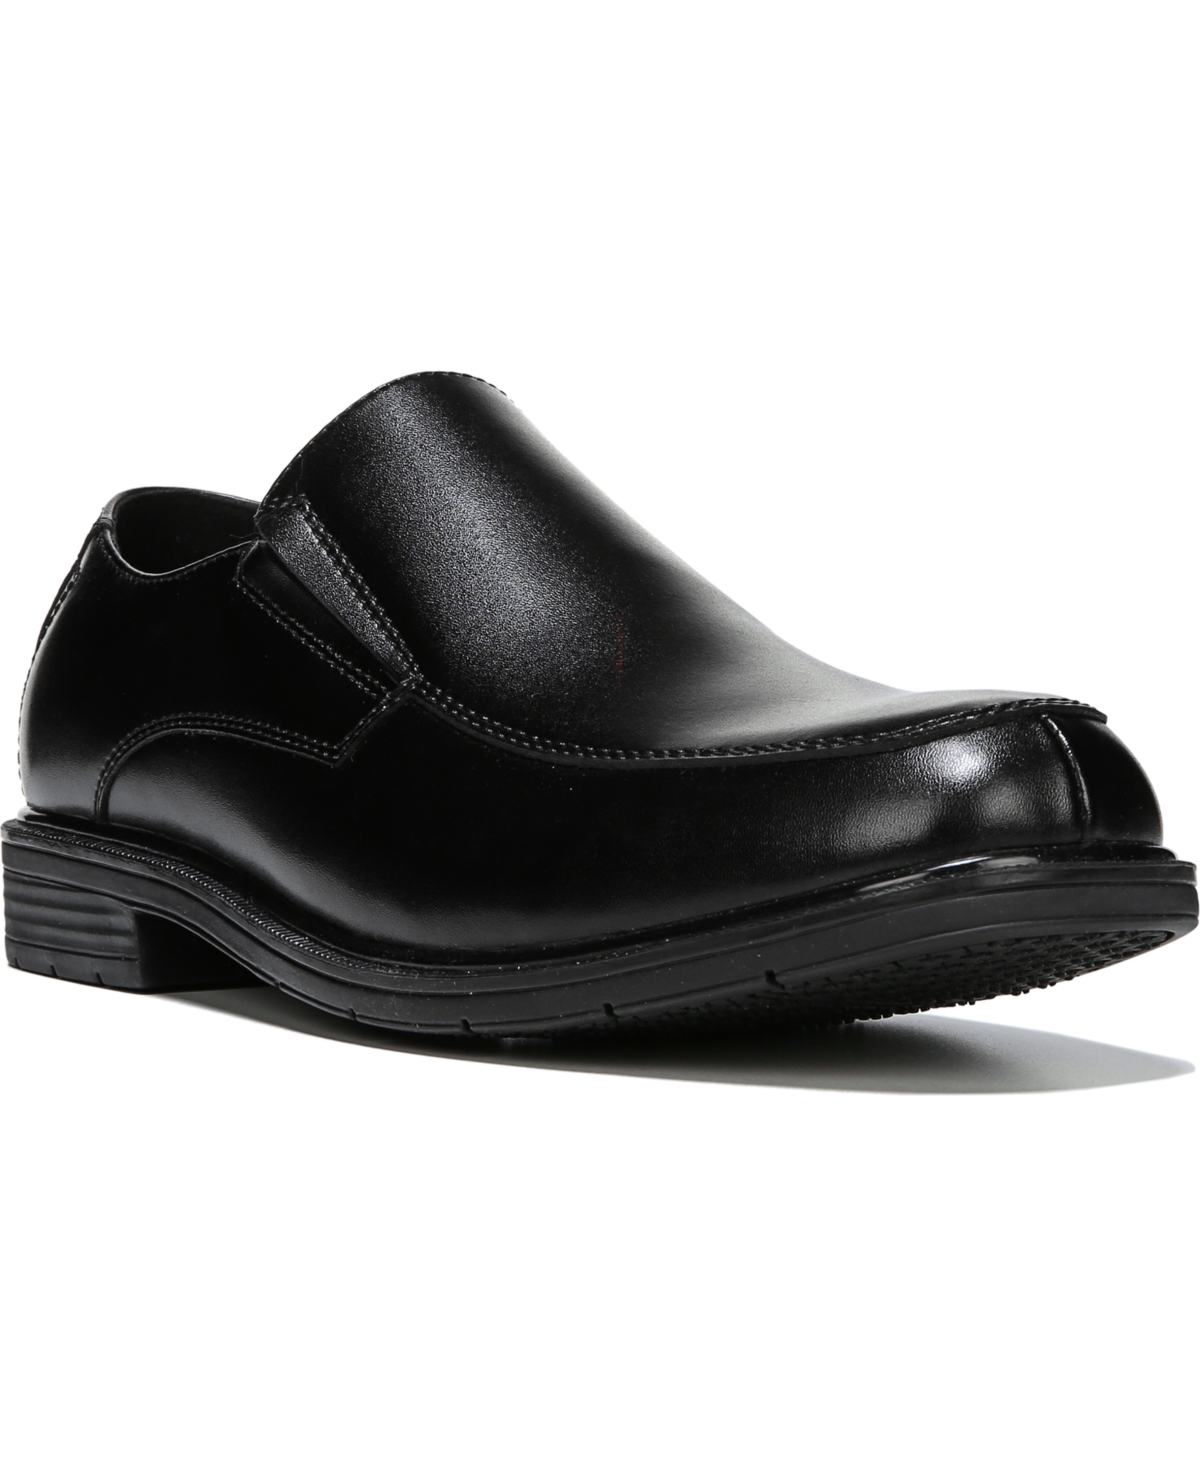 Men's Jeff Slip-On Loafers - Black